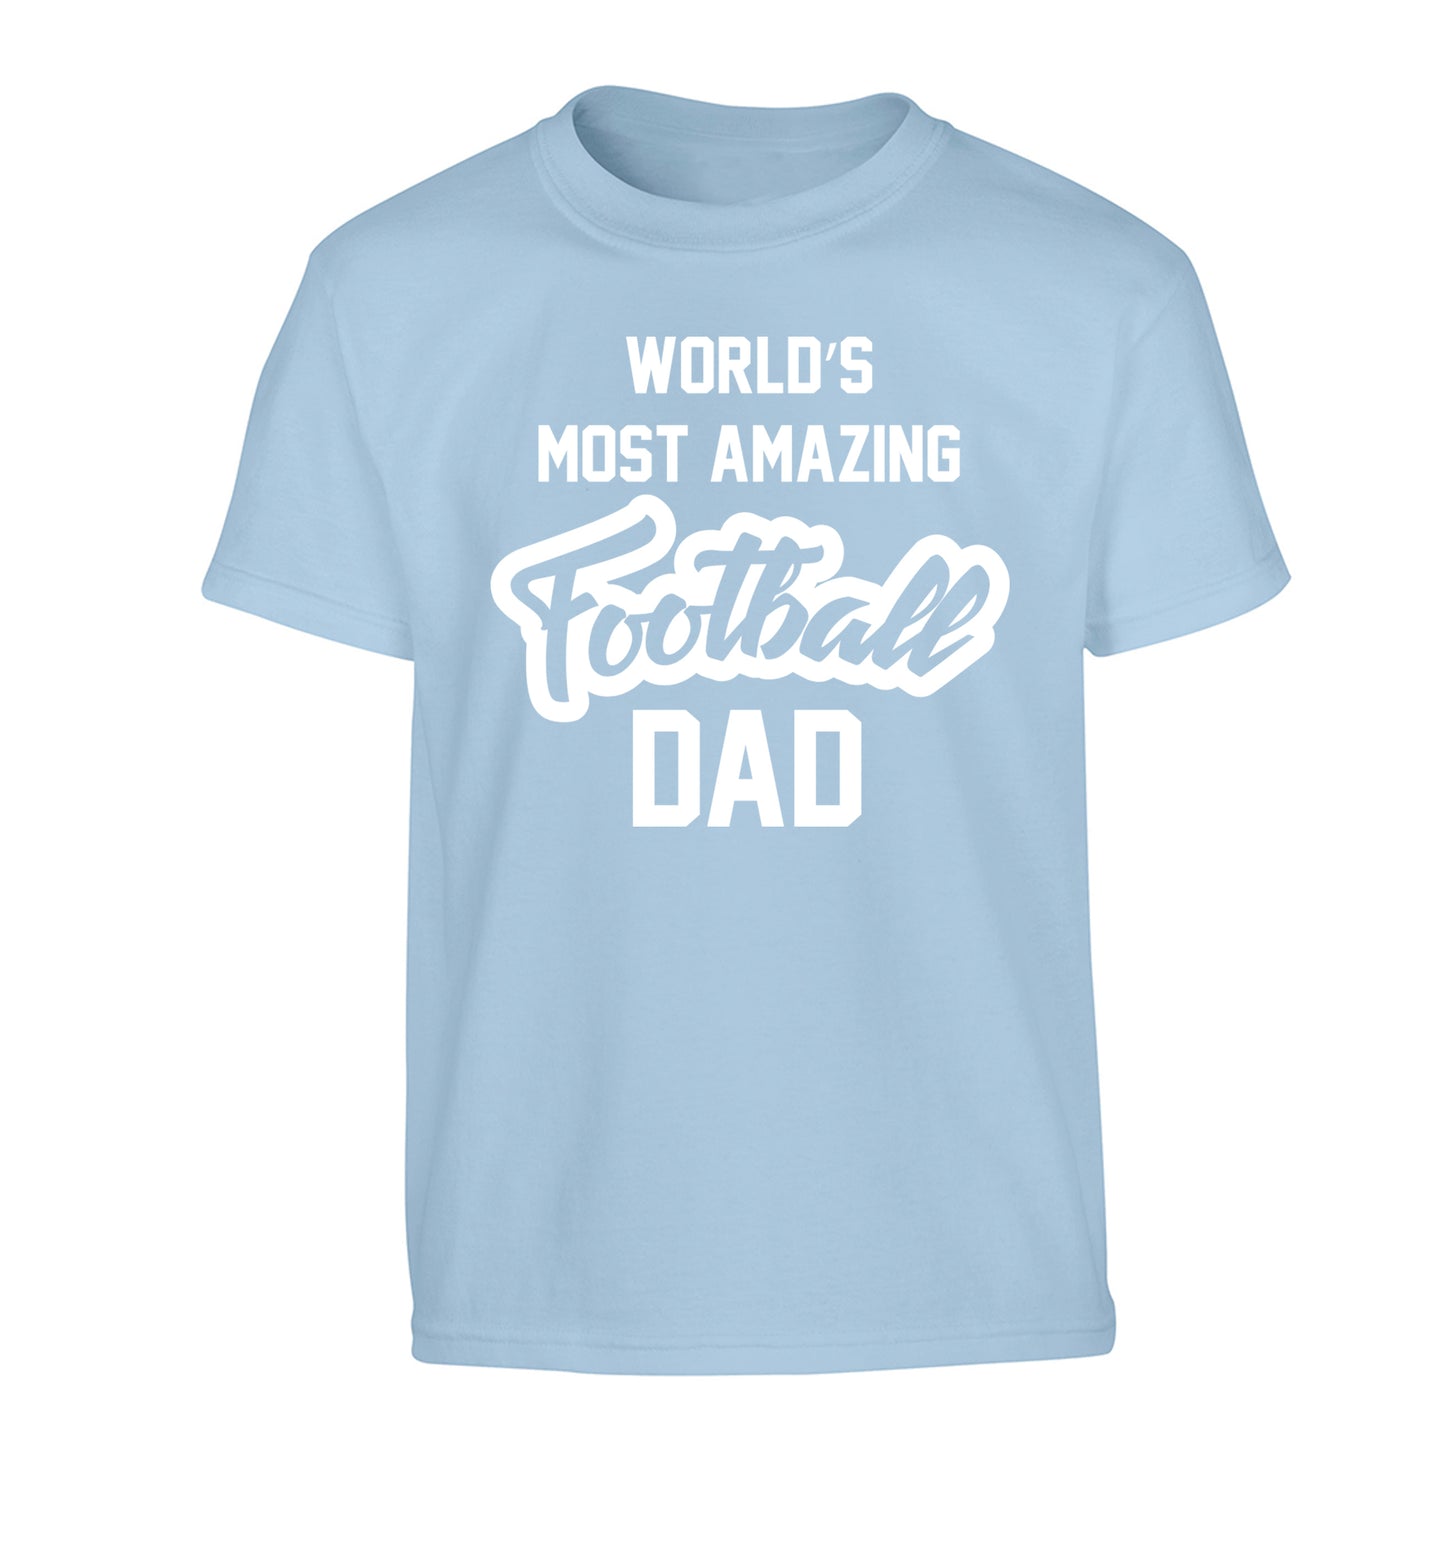 Worlds most amazing football dad Children's light blue Tshirt 12-14 Years